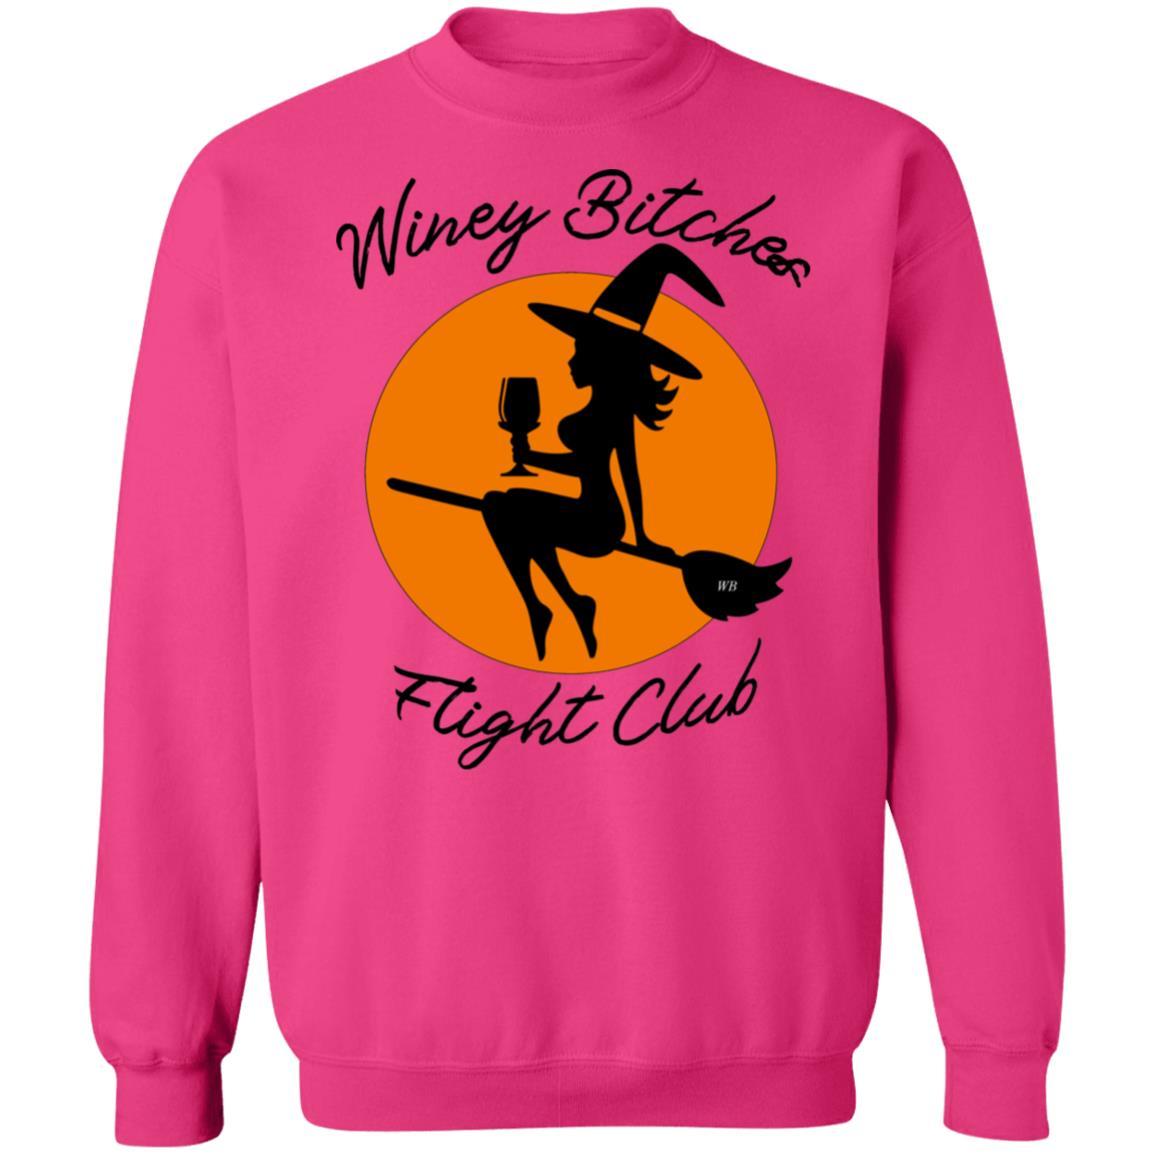 Sweatshirts Heliconia / S WineyBitches.Co "Winey Bitches Flight Club"Crewneck Pullover Sweatshirt  8 oz. WineyBitchesCo